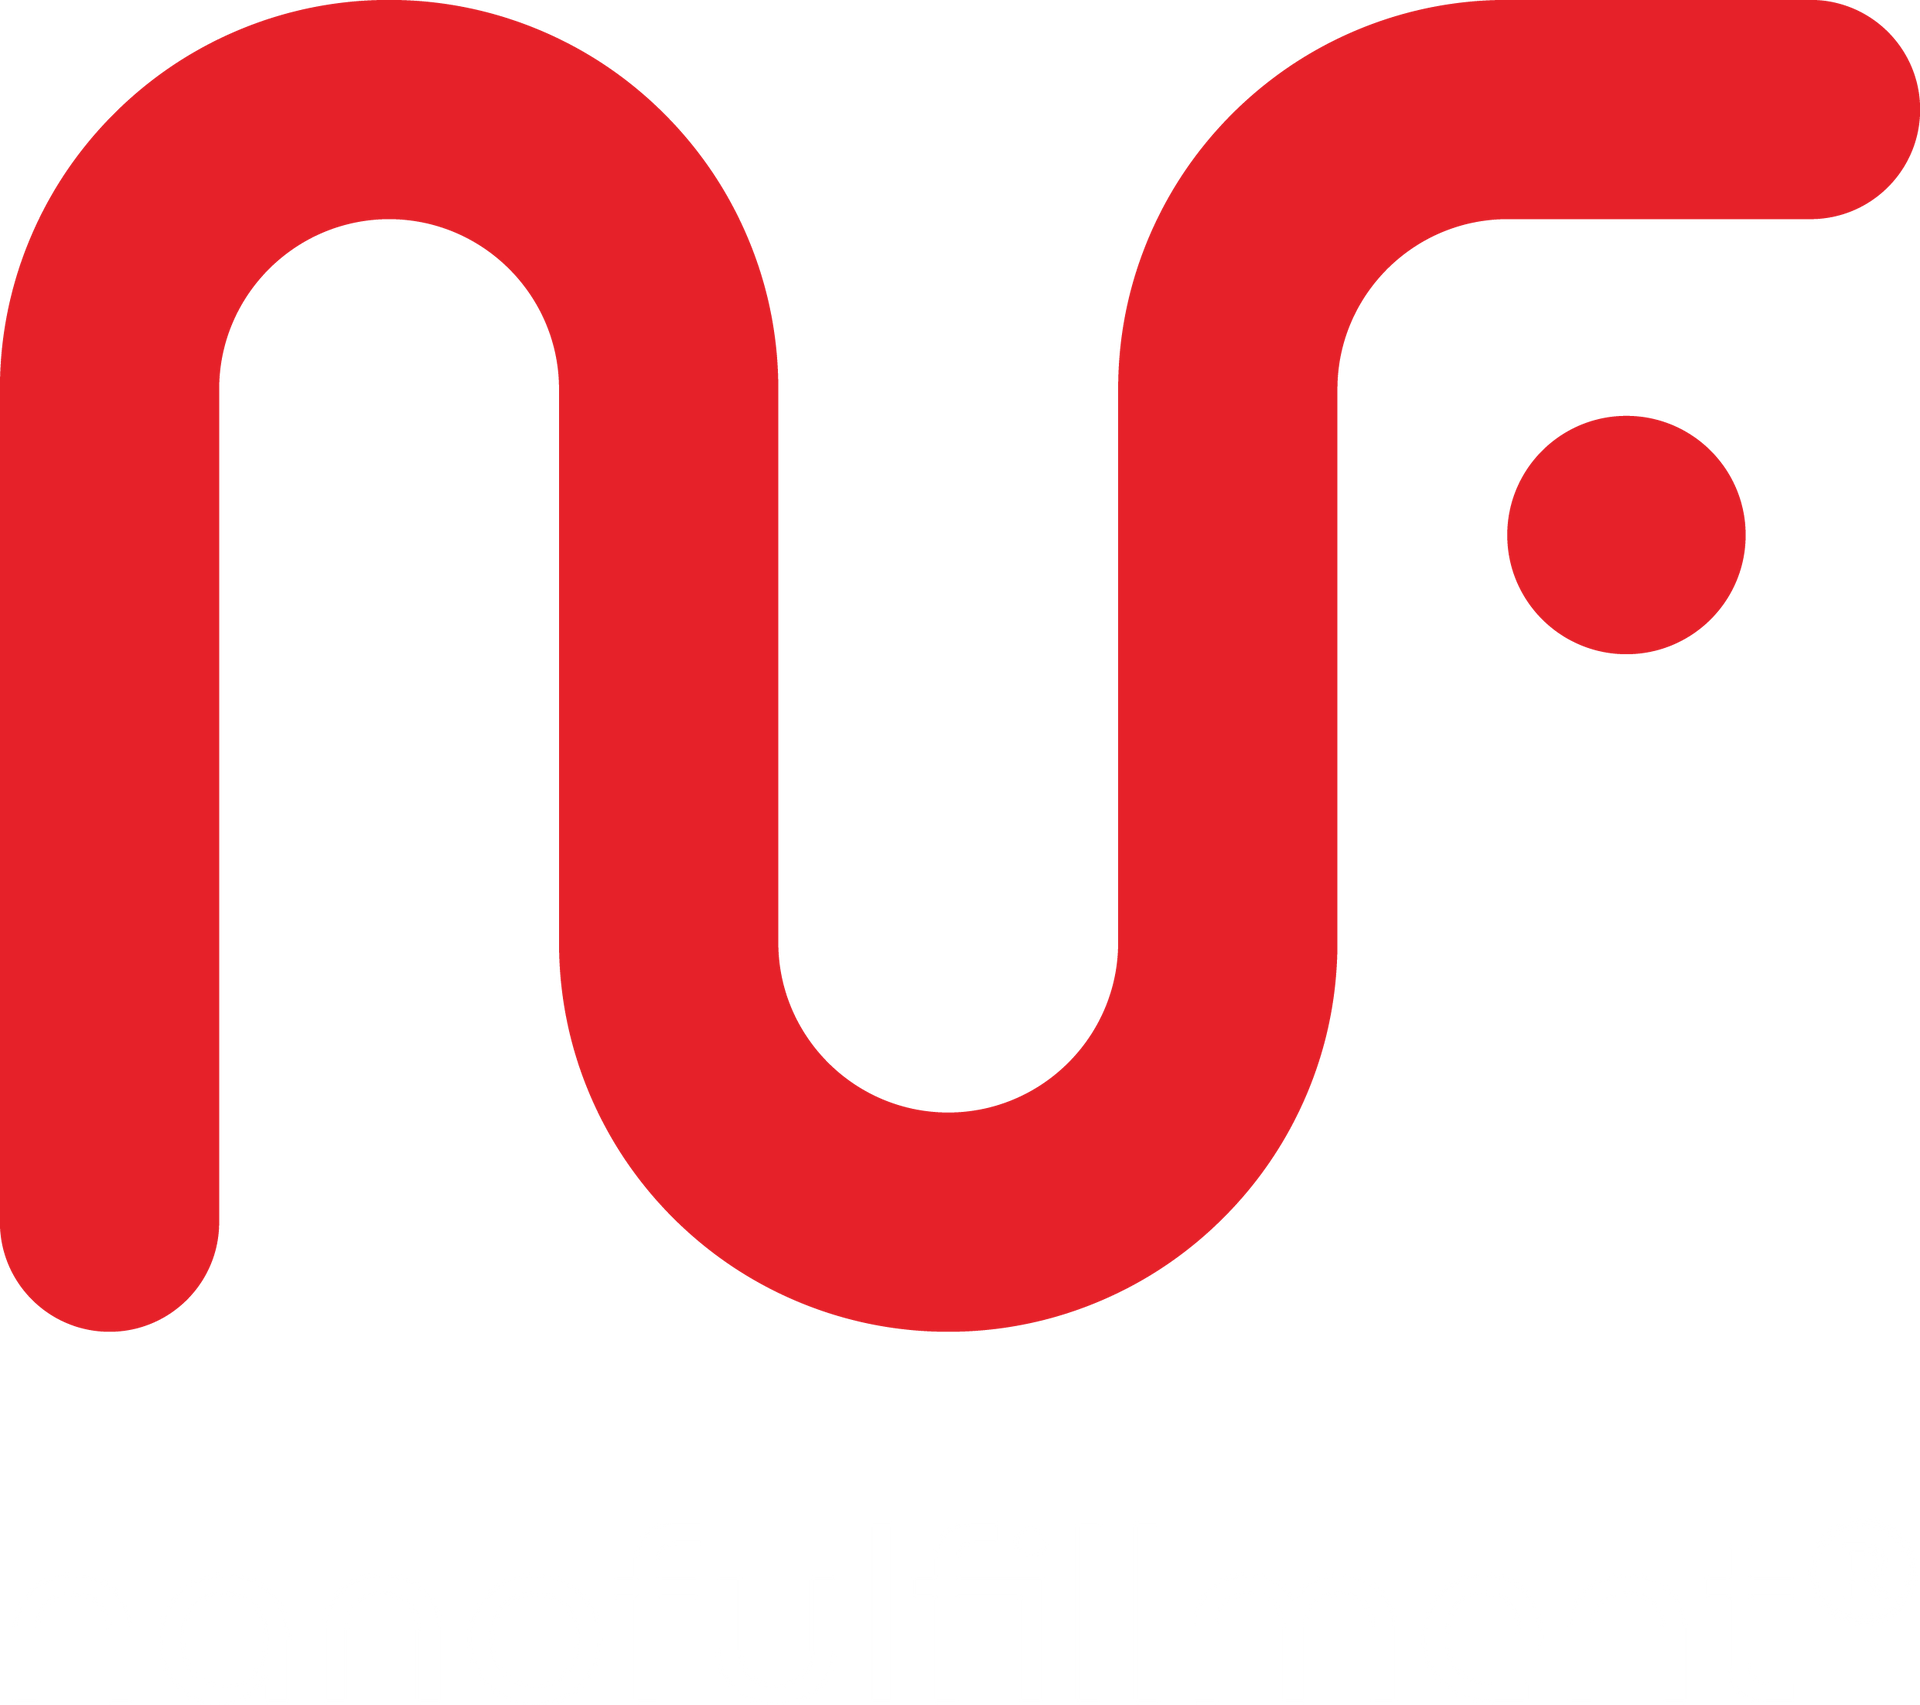 NanoFulfillment®